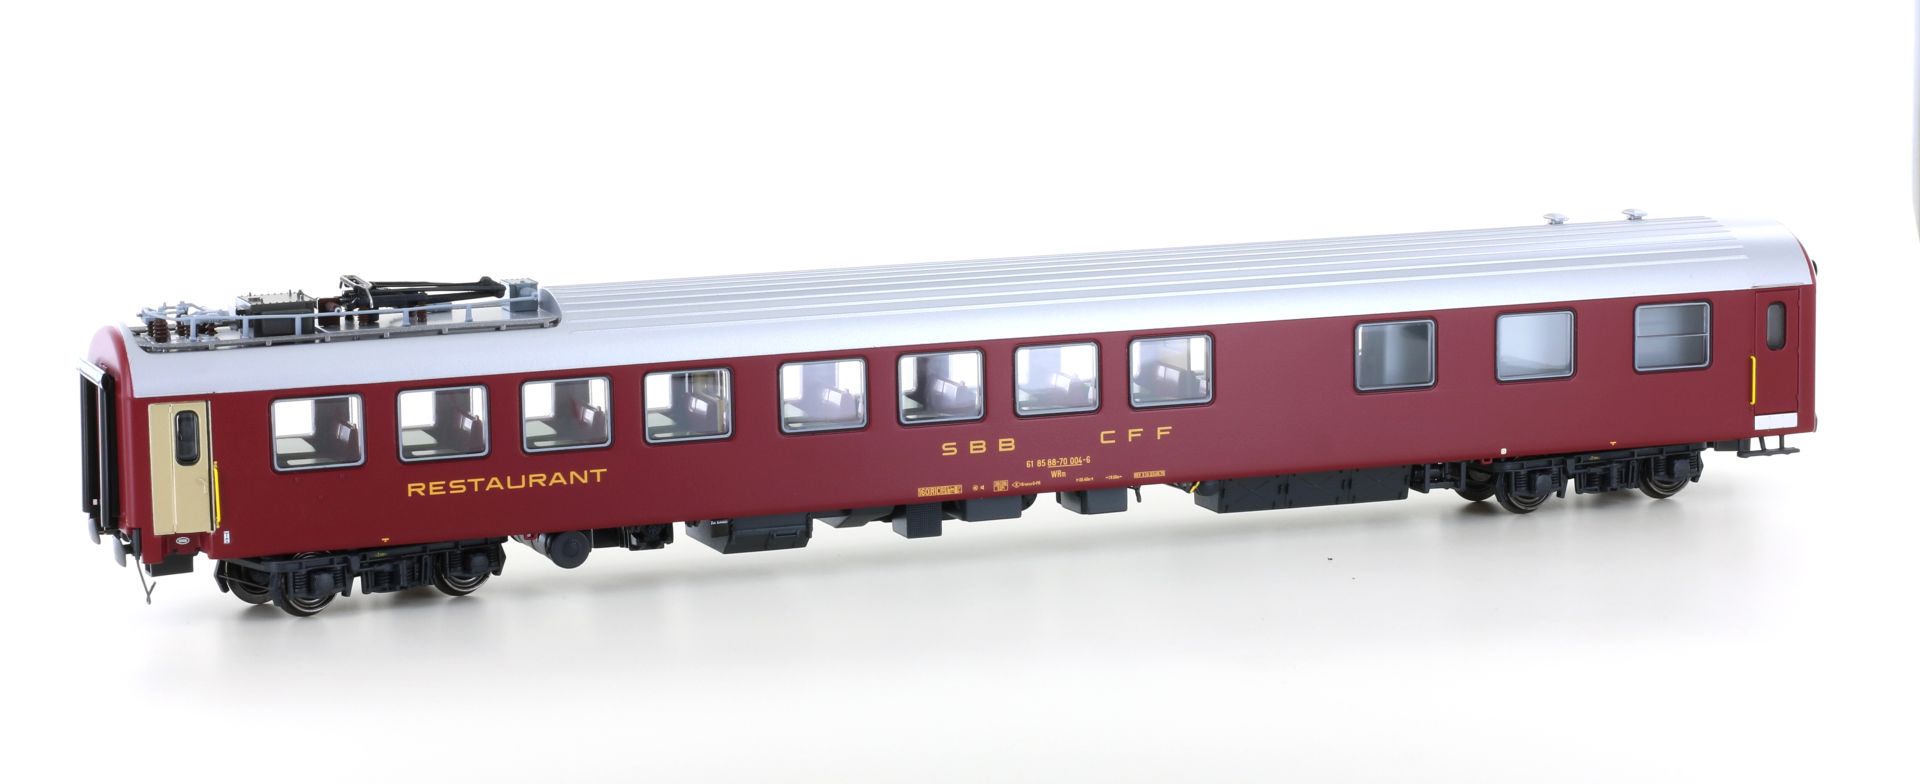 L.S. Models 472005 - Speisewagen UIC-X, rot, SBB, Ep.IV